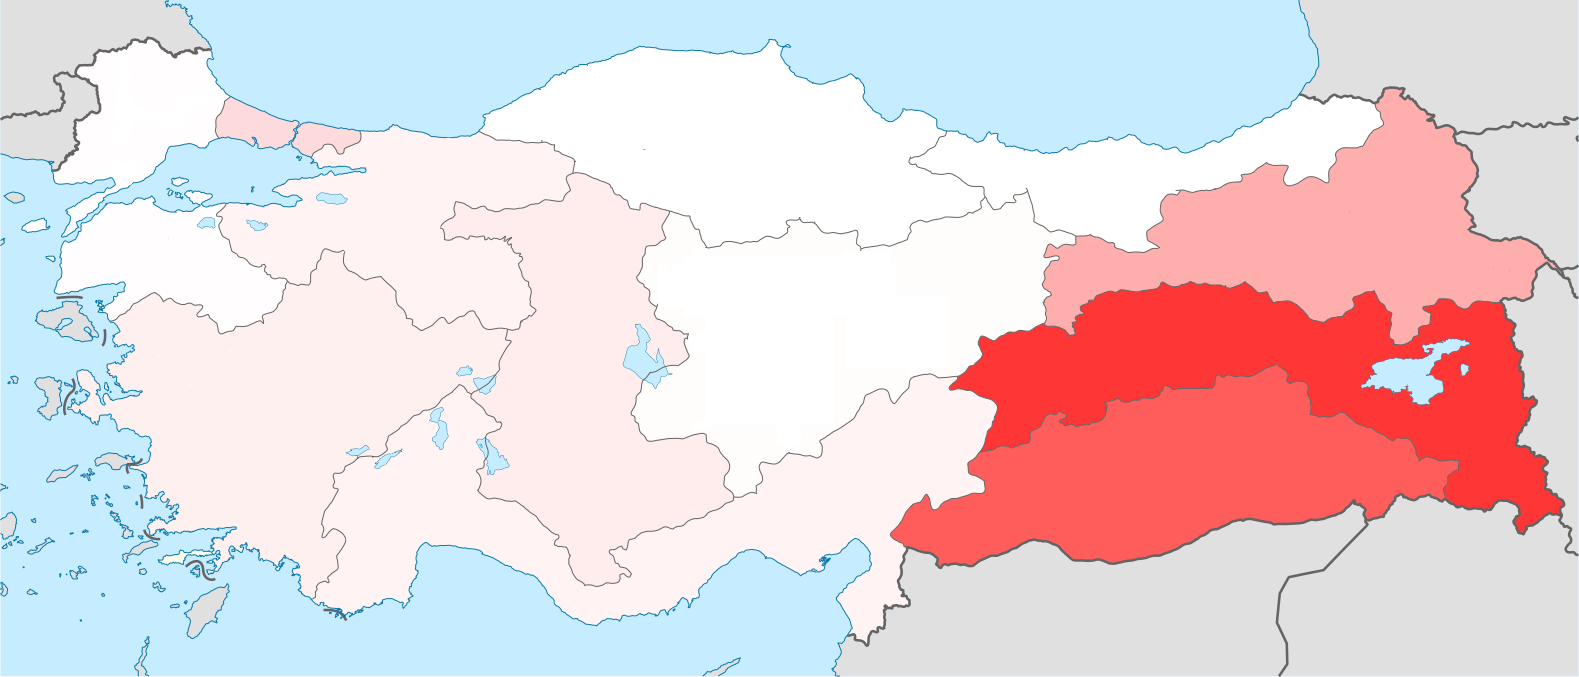 Kurdish_population_by_region_(KONDA_2010)